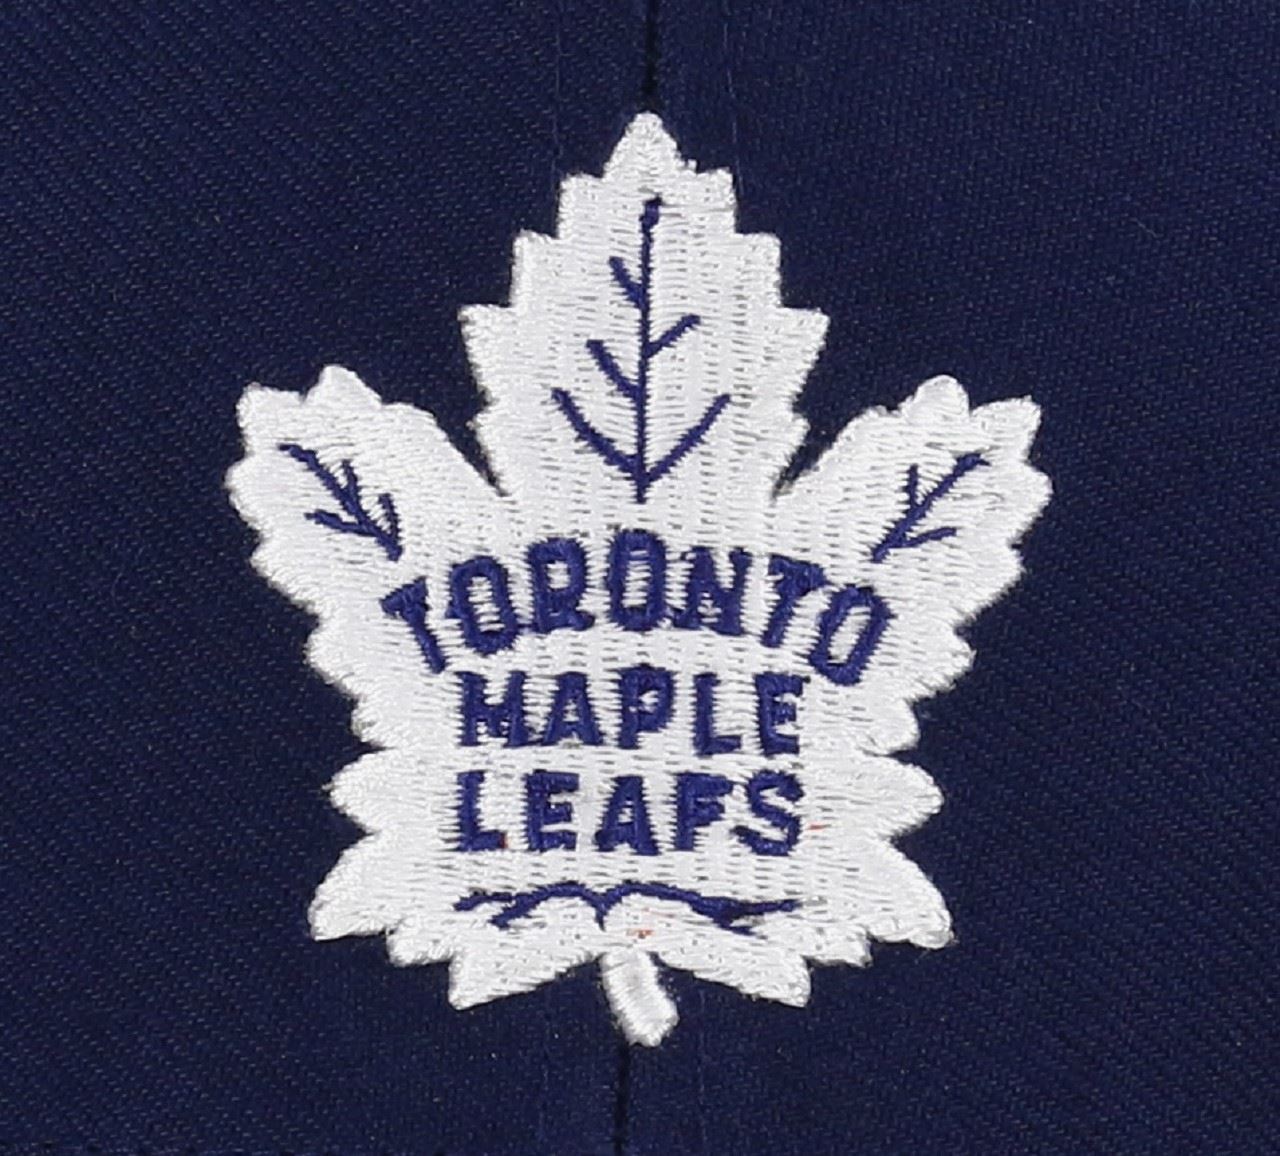 Toronto Maple Leafs Light Navy NHL Most Value P. Cap '47